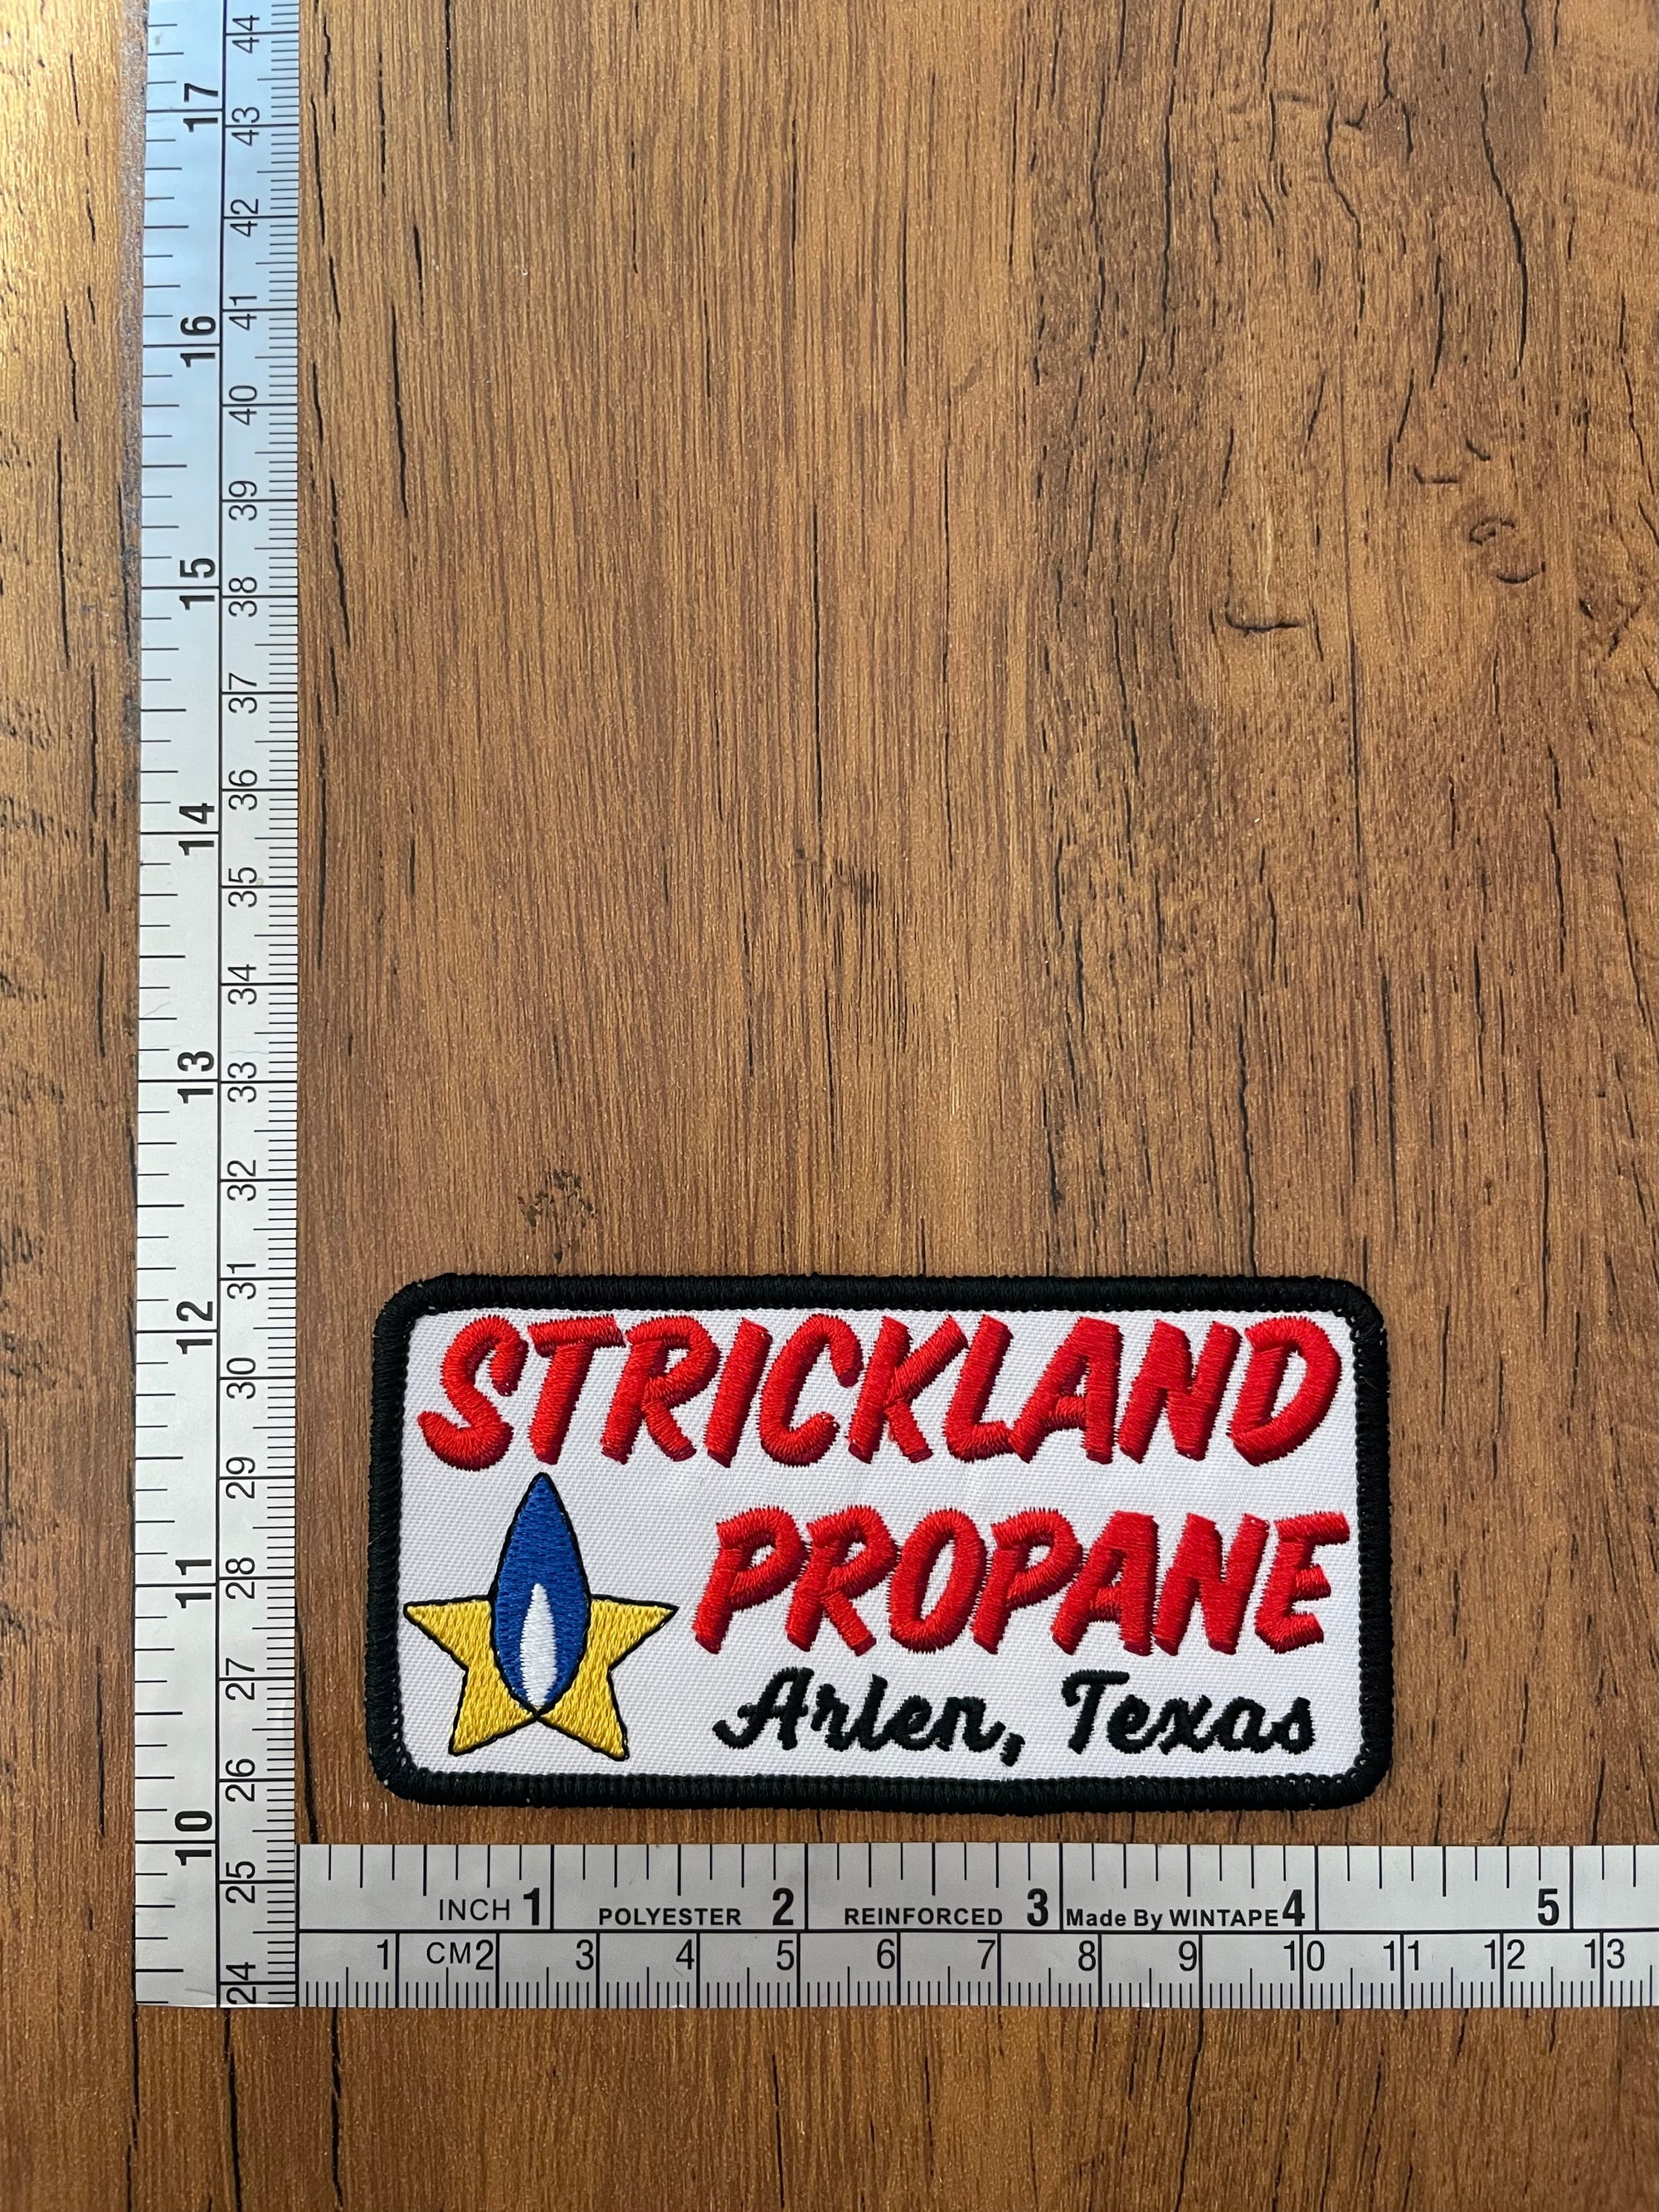 Strickland Propane. Arlen, Texas